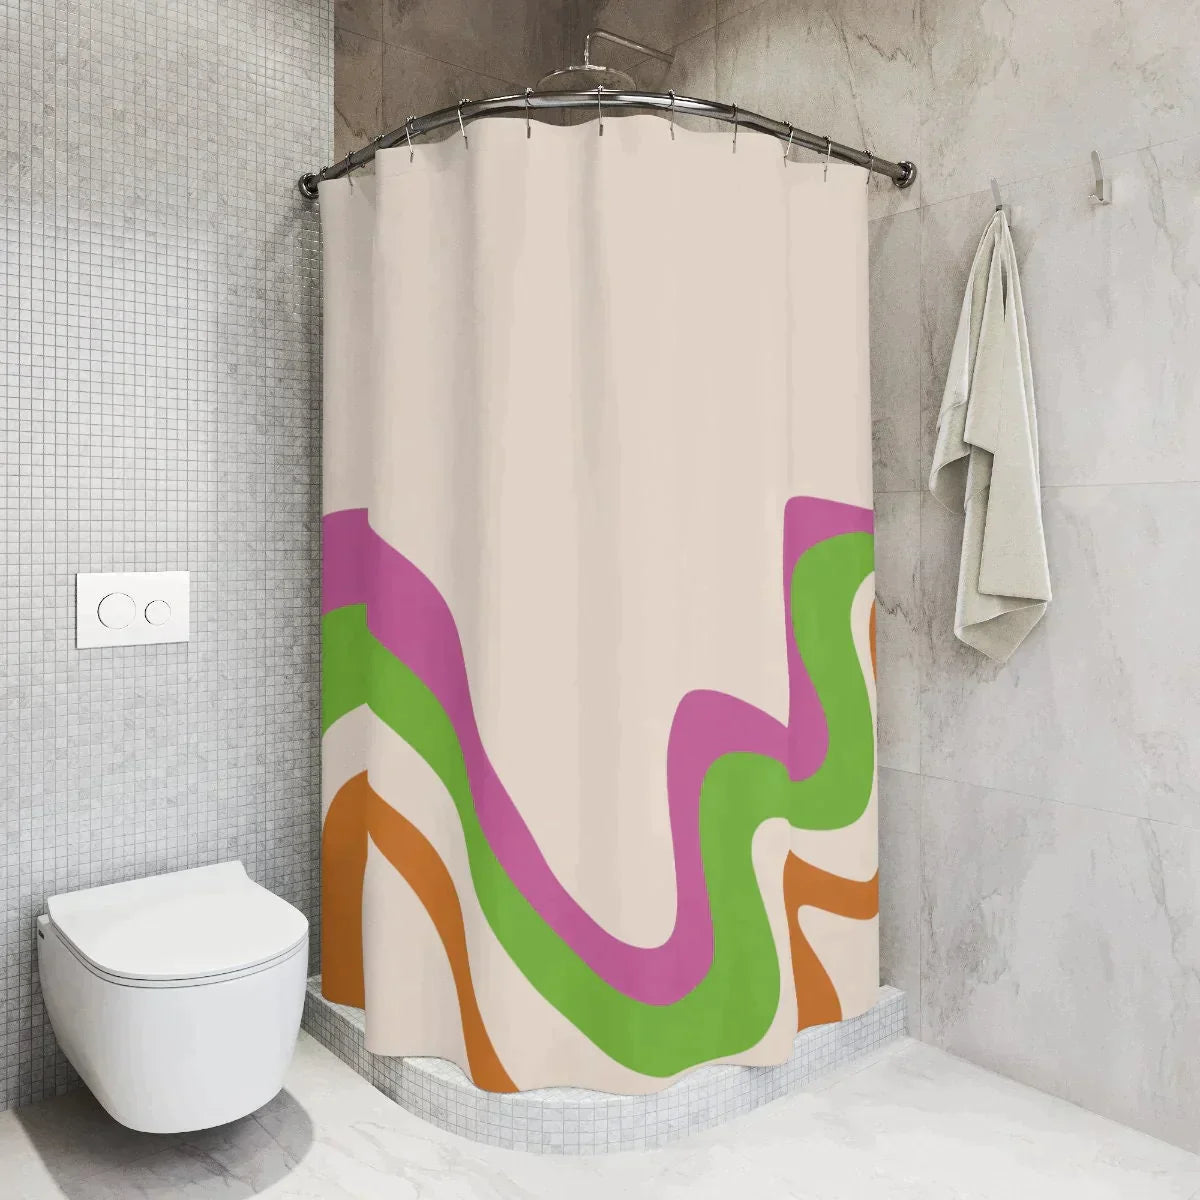 Boho Shower Curtain, Bobo Pink Butterfly Curtain, Groovy Bathroom Accessories, Housewarming Gift, Hippie Decor, Extra Long Shower Curtain